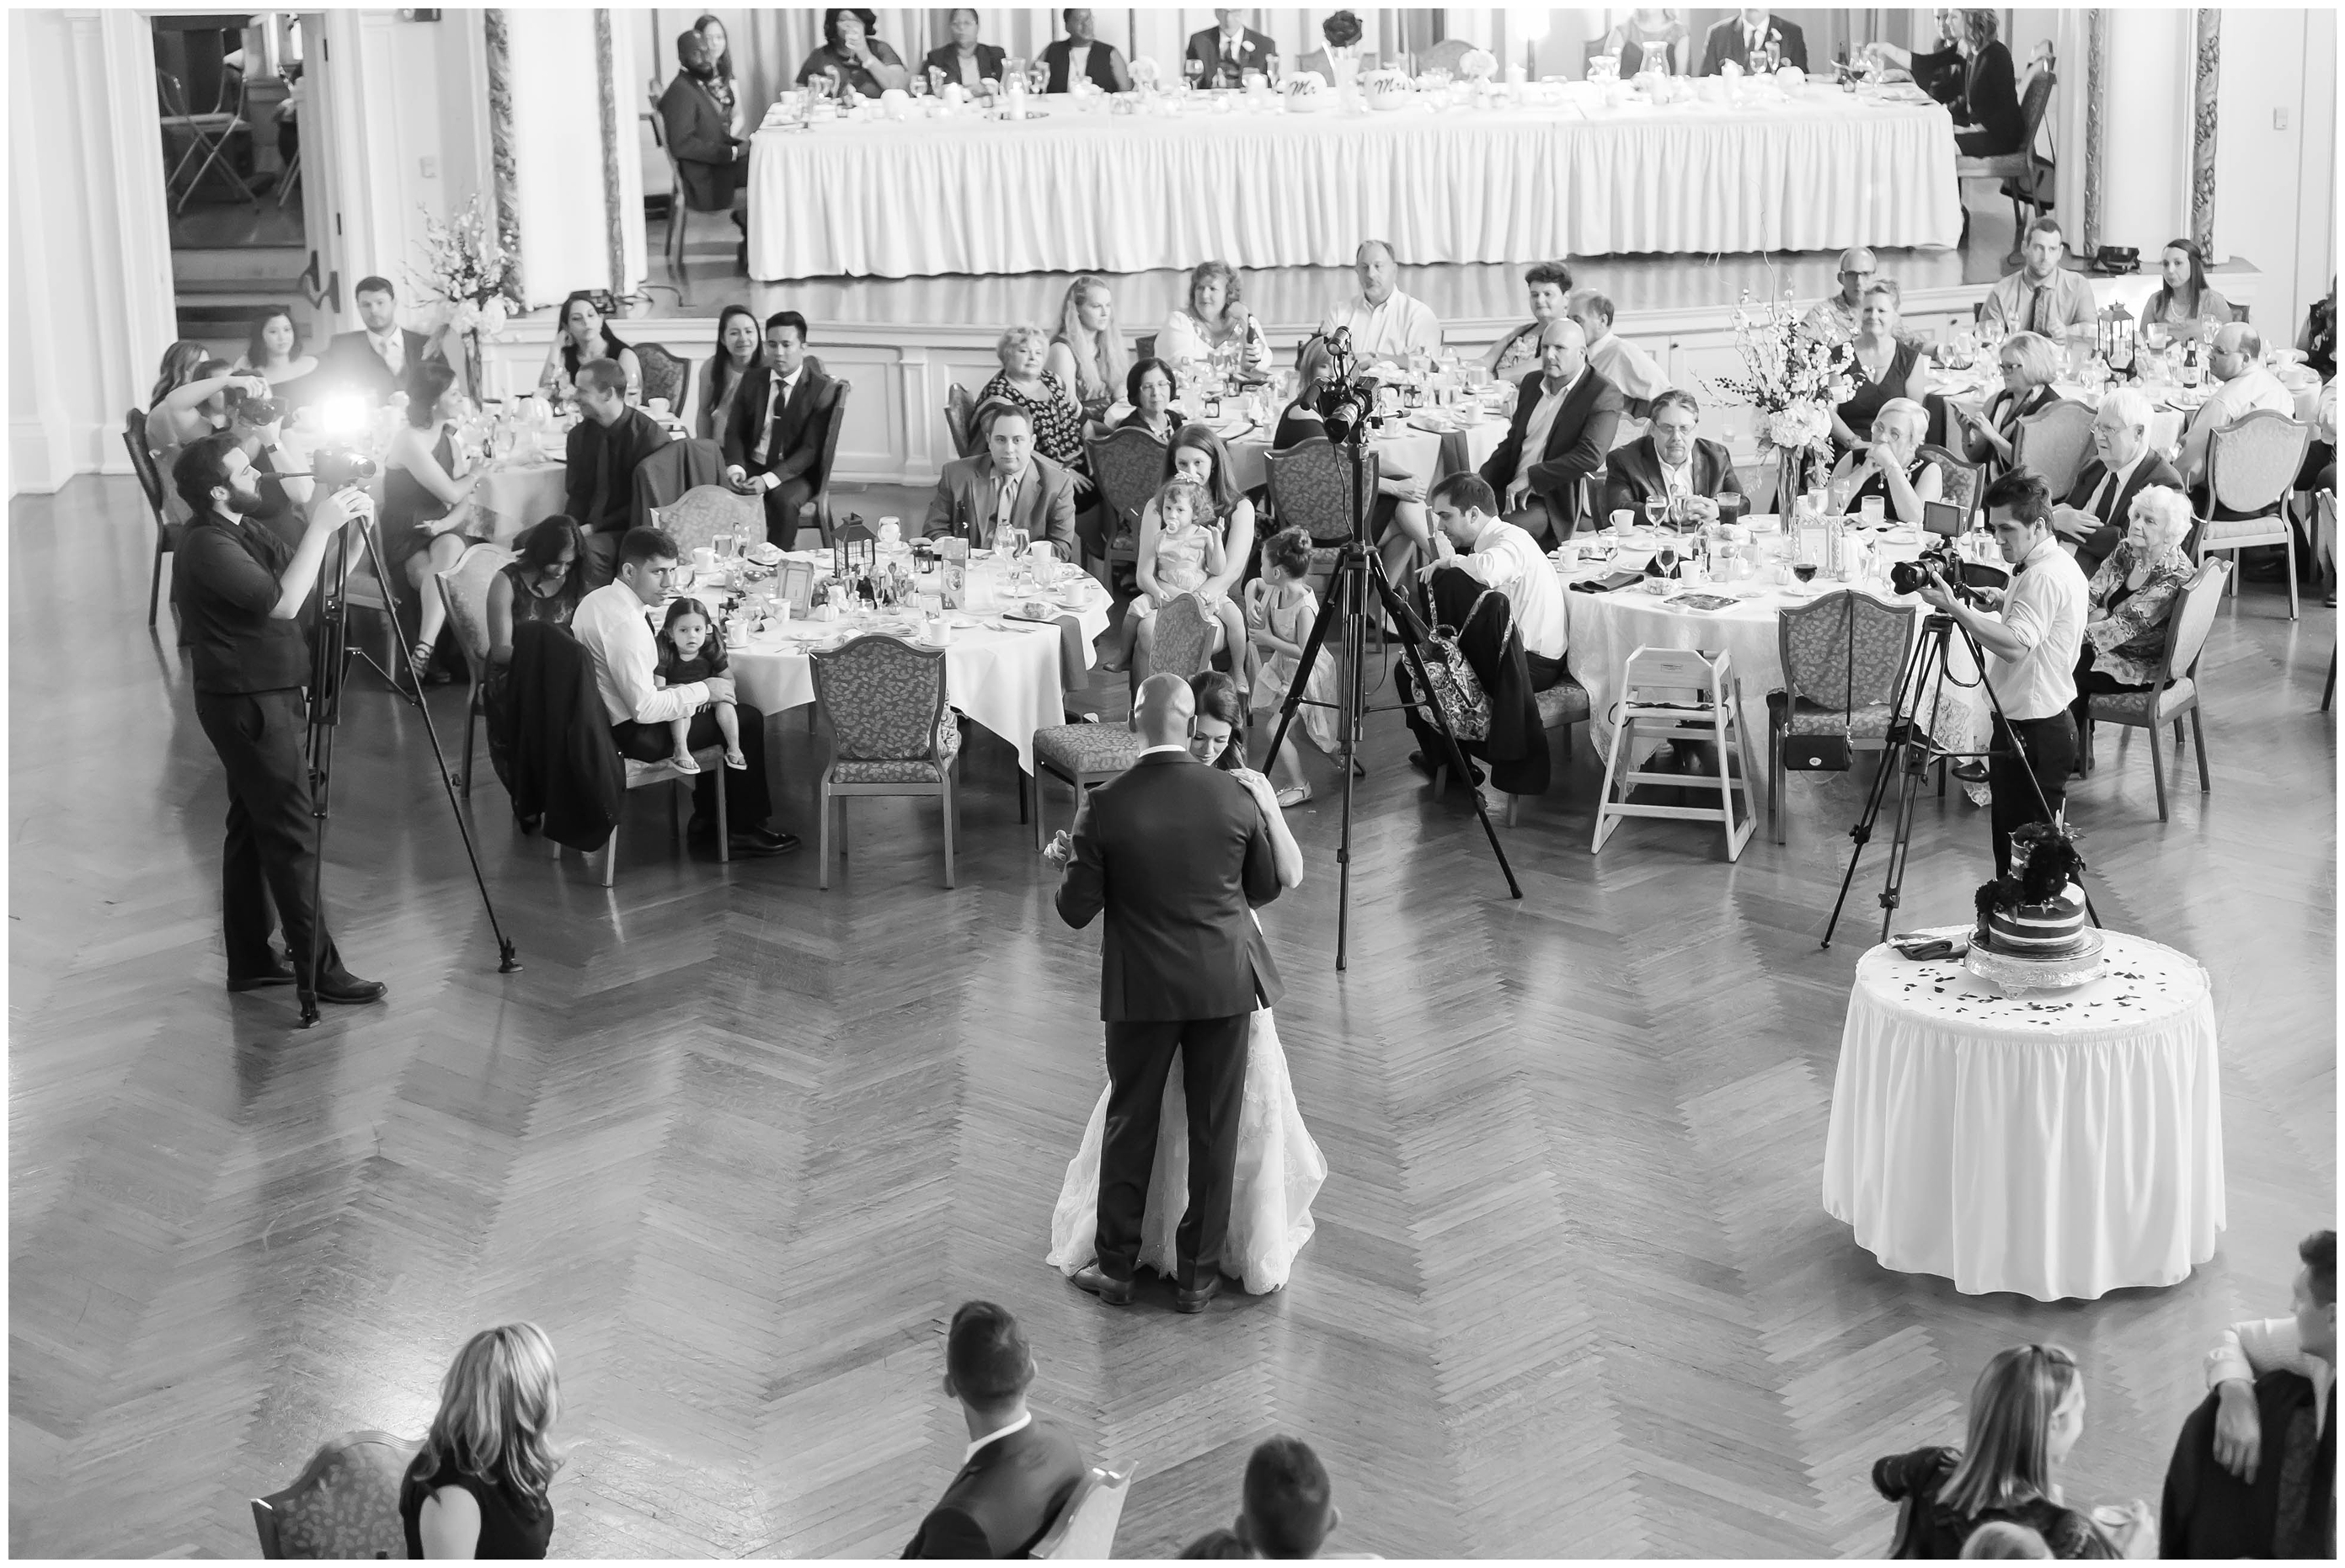 Cleveland Wedding Photographer,Groomsmen in navy suits,Stan Hywet Fall Wedding,Stan Hywet Hall and Gardens,loren jackson photography,photographer akron ohio,